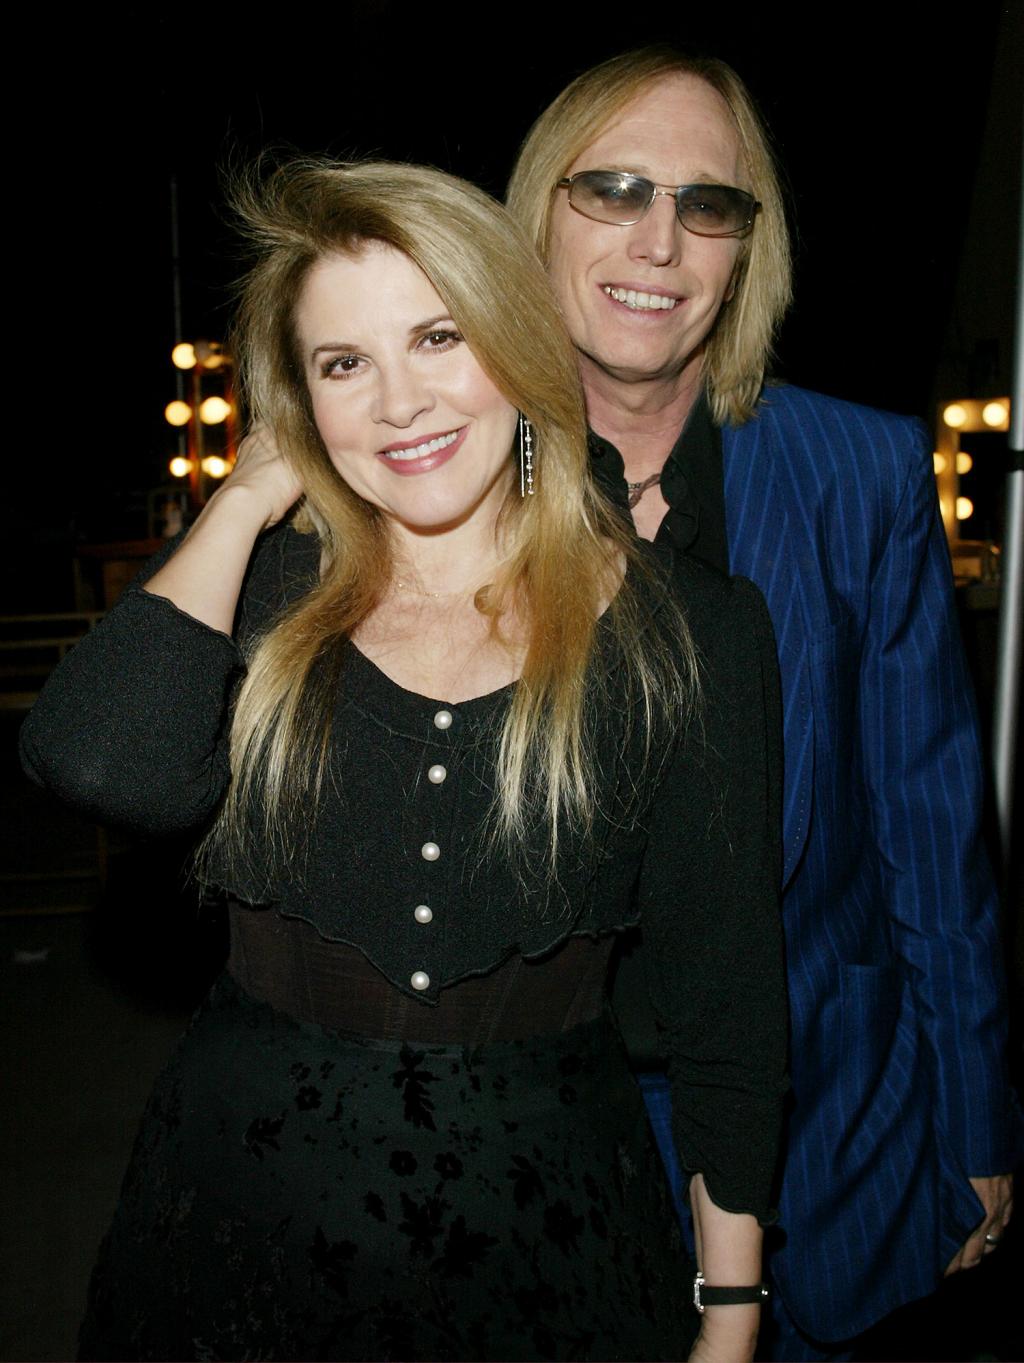 Stevie Nicks Recalls Last Time She Saw Tom Petty Perform: â€˜What a Magical Moment ThatÂ Wasâ€™